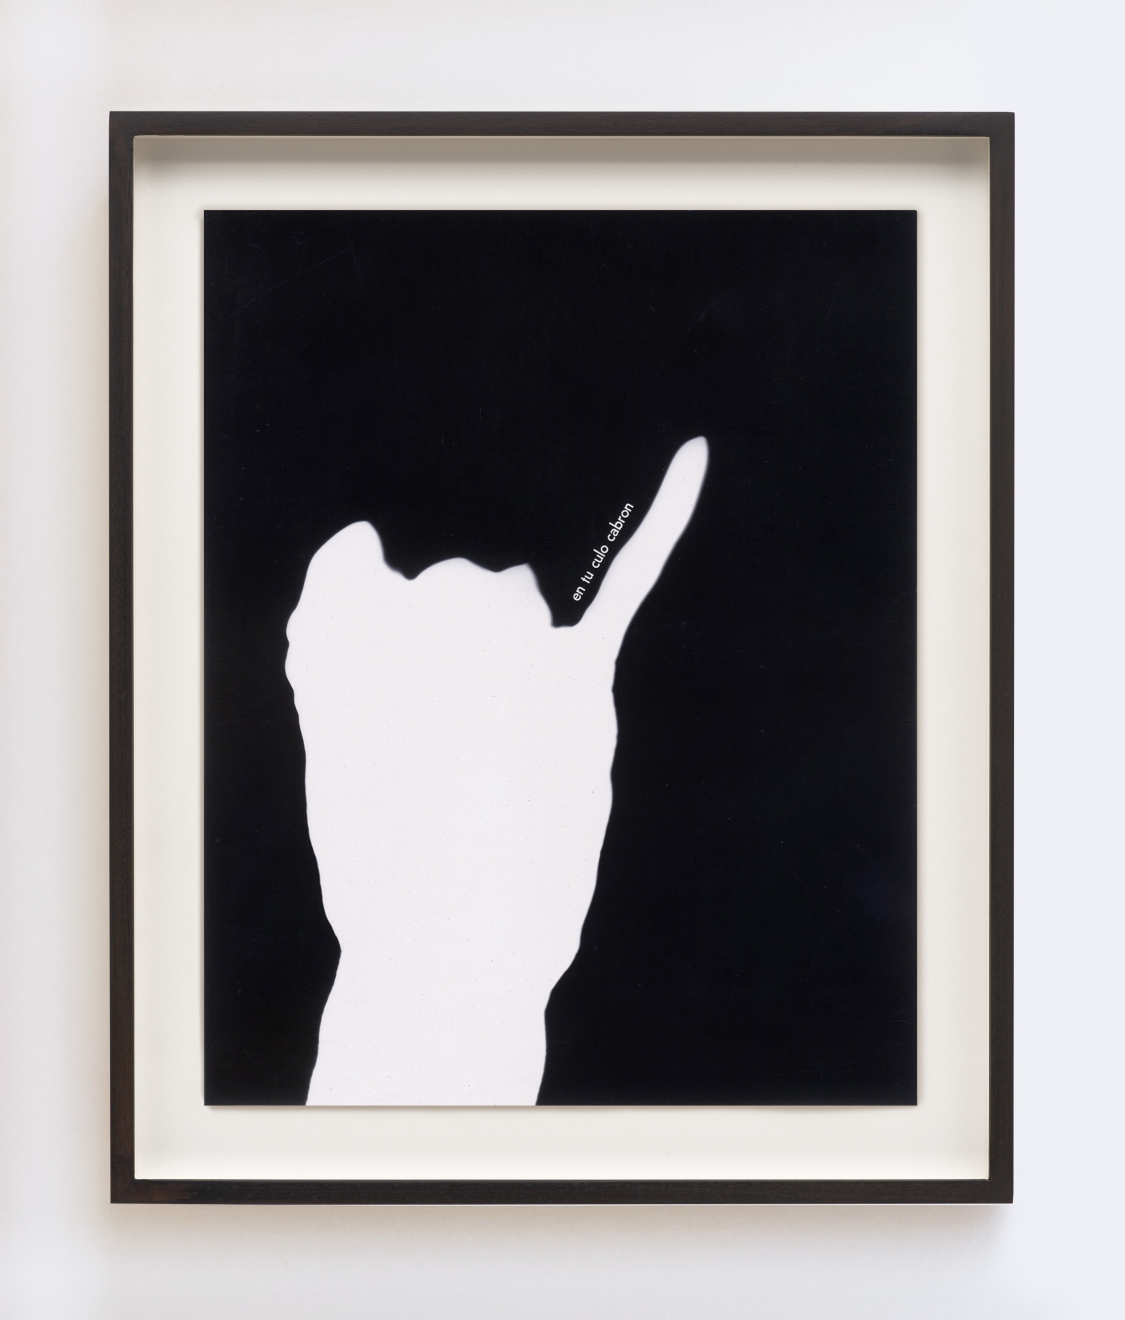 Raul Guerrero Obscene Hand Gesture with Spanish Translation, 1973